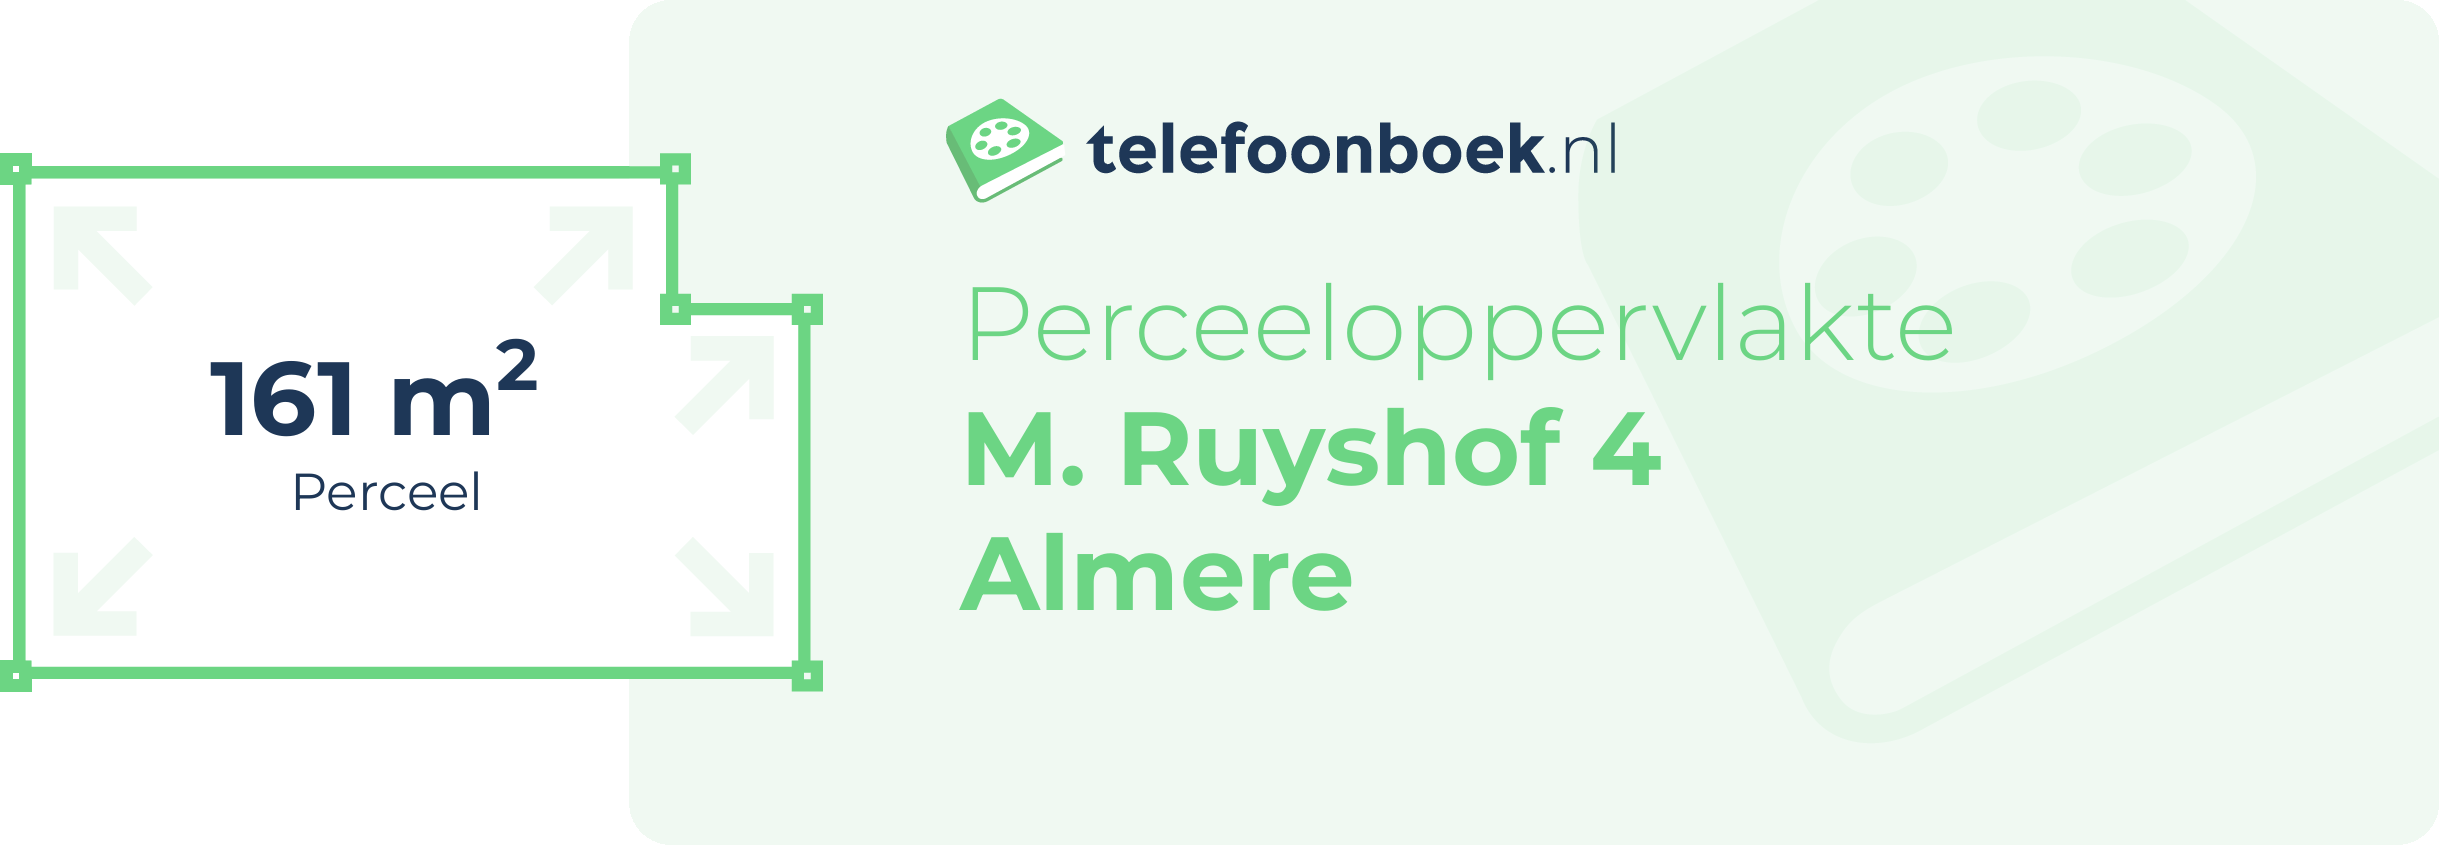 Perceeloppervlakte M. Ruyshof 4 Almere